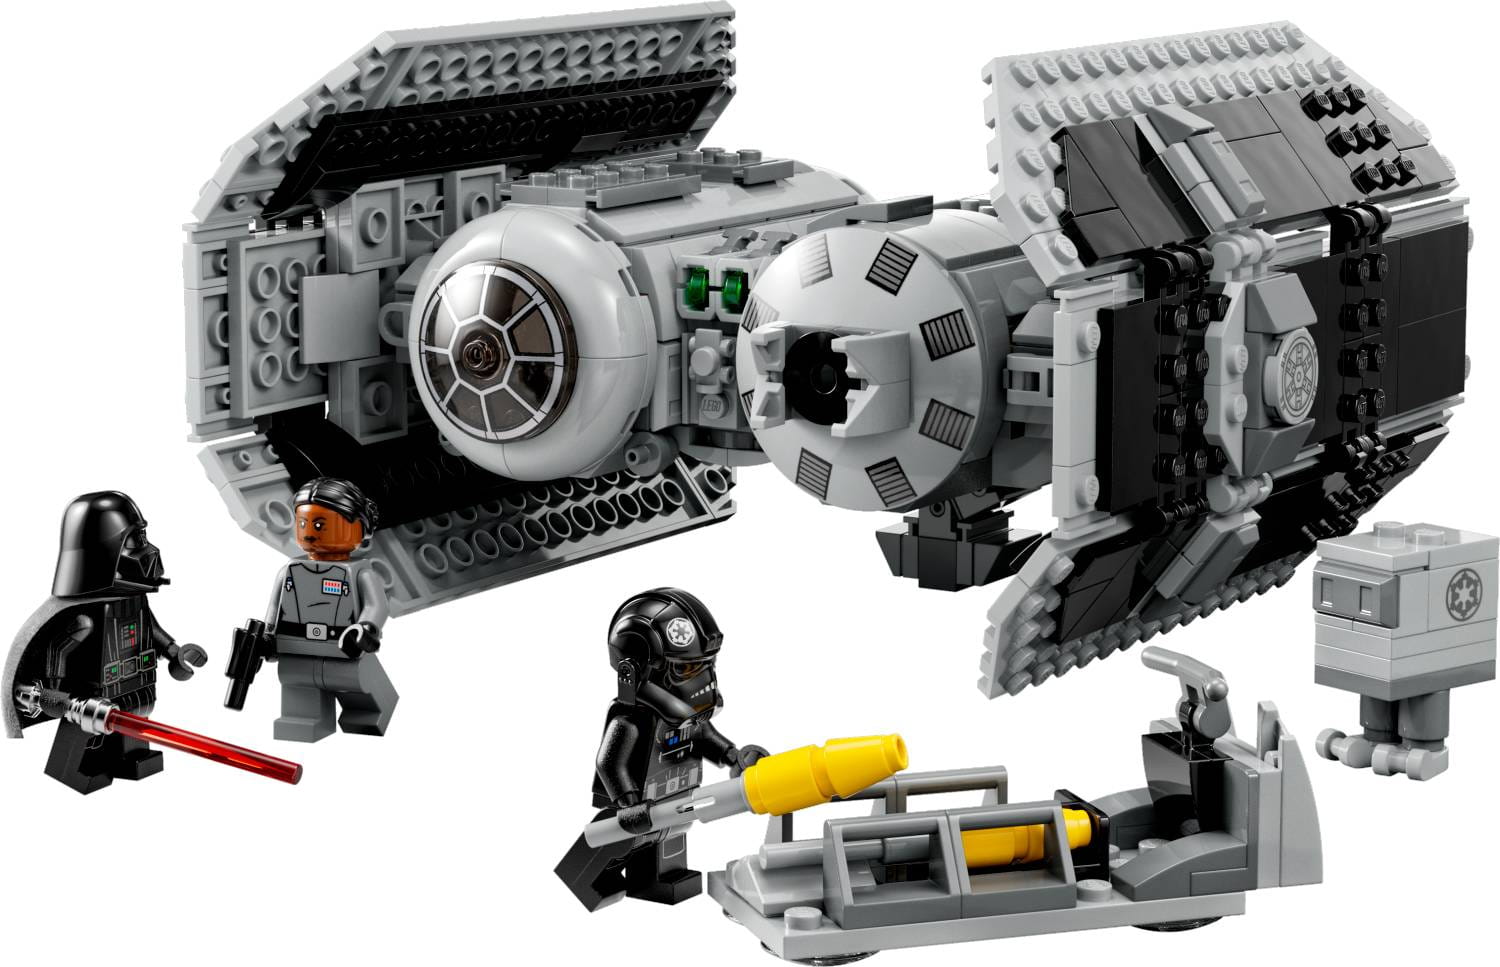 LEGO Star Wars ™ TIE Bomber ™